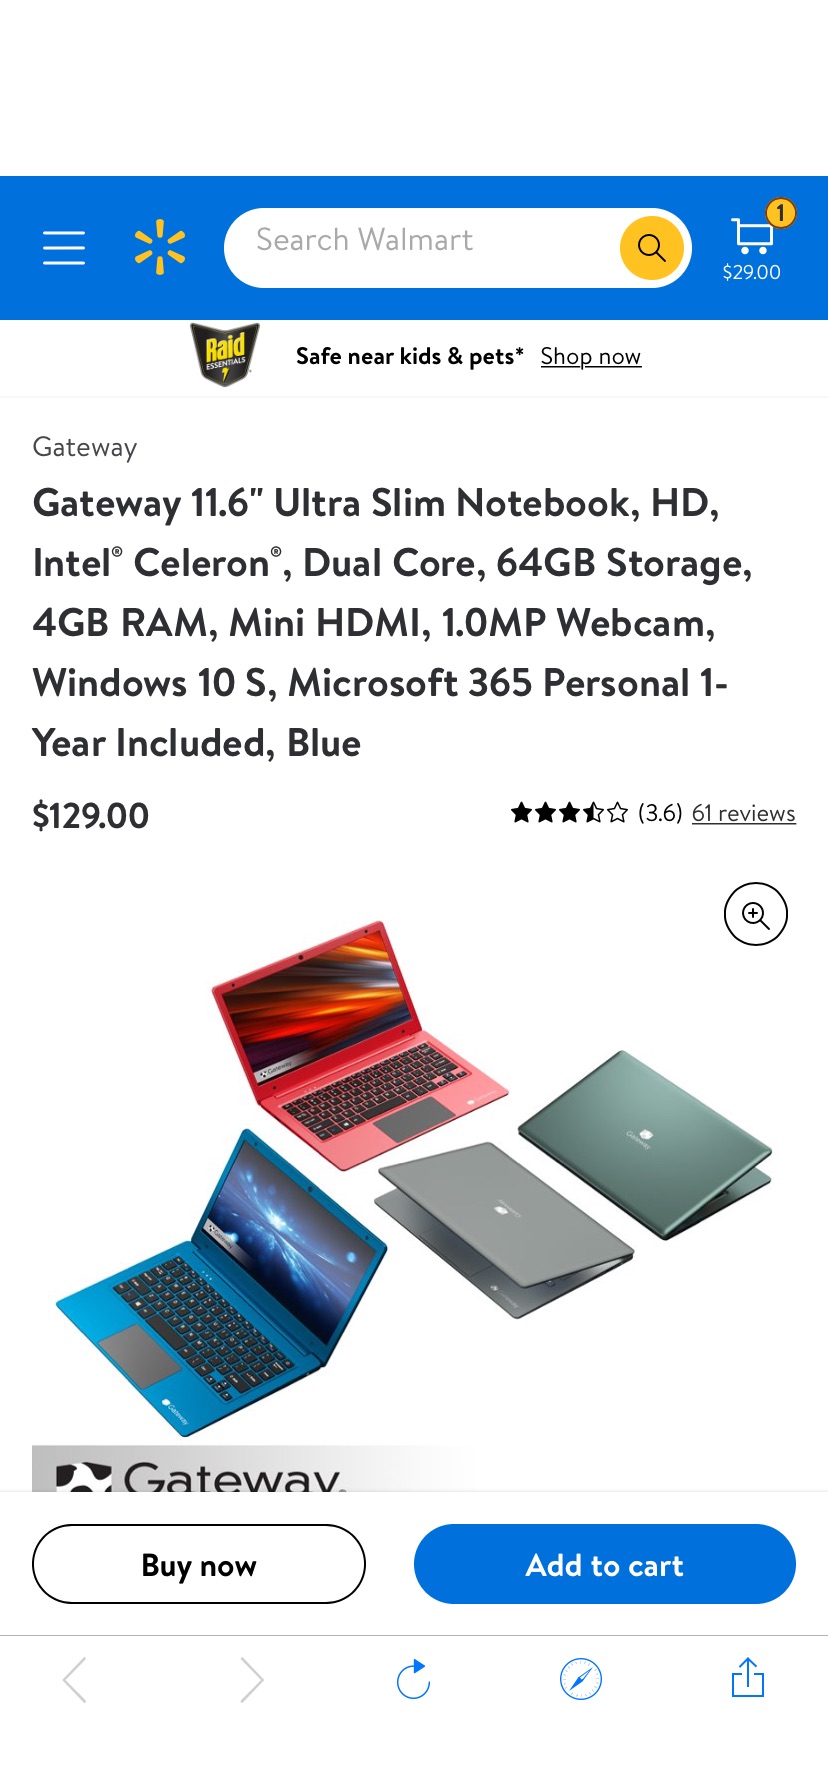 Gateway 11.6" Ultra Slim Notebook, HD, Intel® Celeron®, Dual Core, 64GB Storage, 4GB RAM, Mini HDMI, 1.0MP Webcam, Windows 10 S, Microsoft 365 Personal 1-Year Included, Blue - Walmart.com笔记本电脑